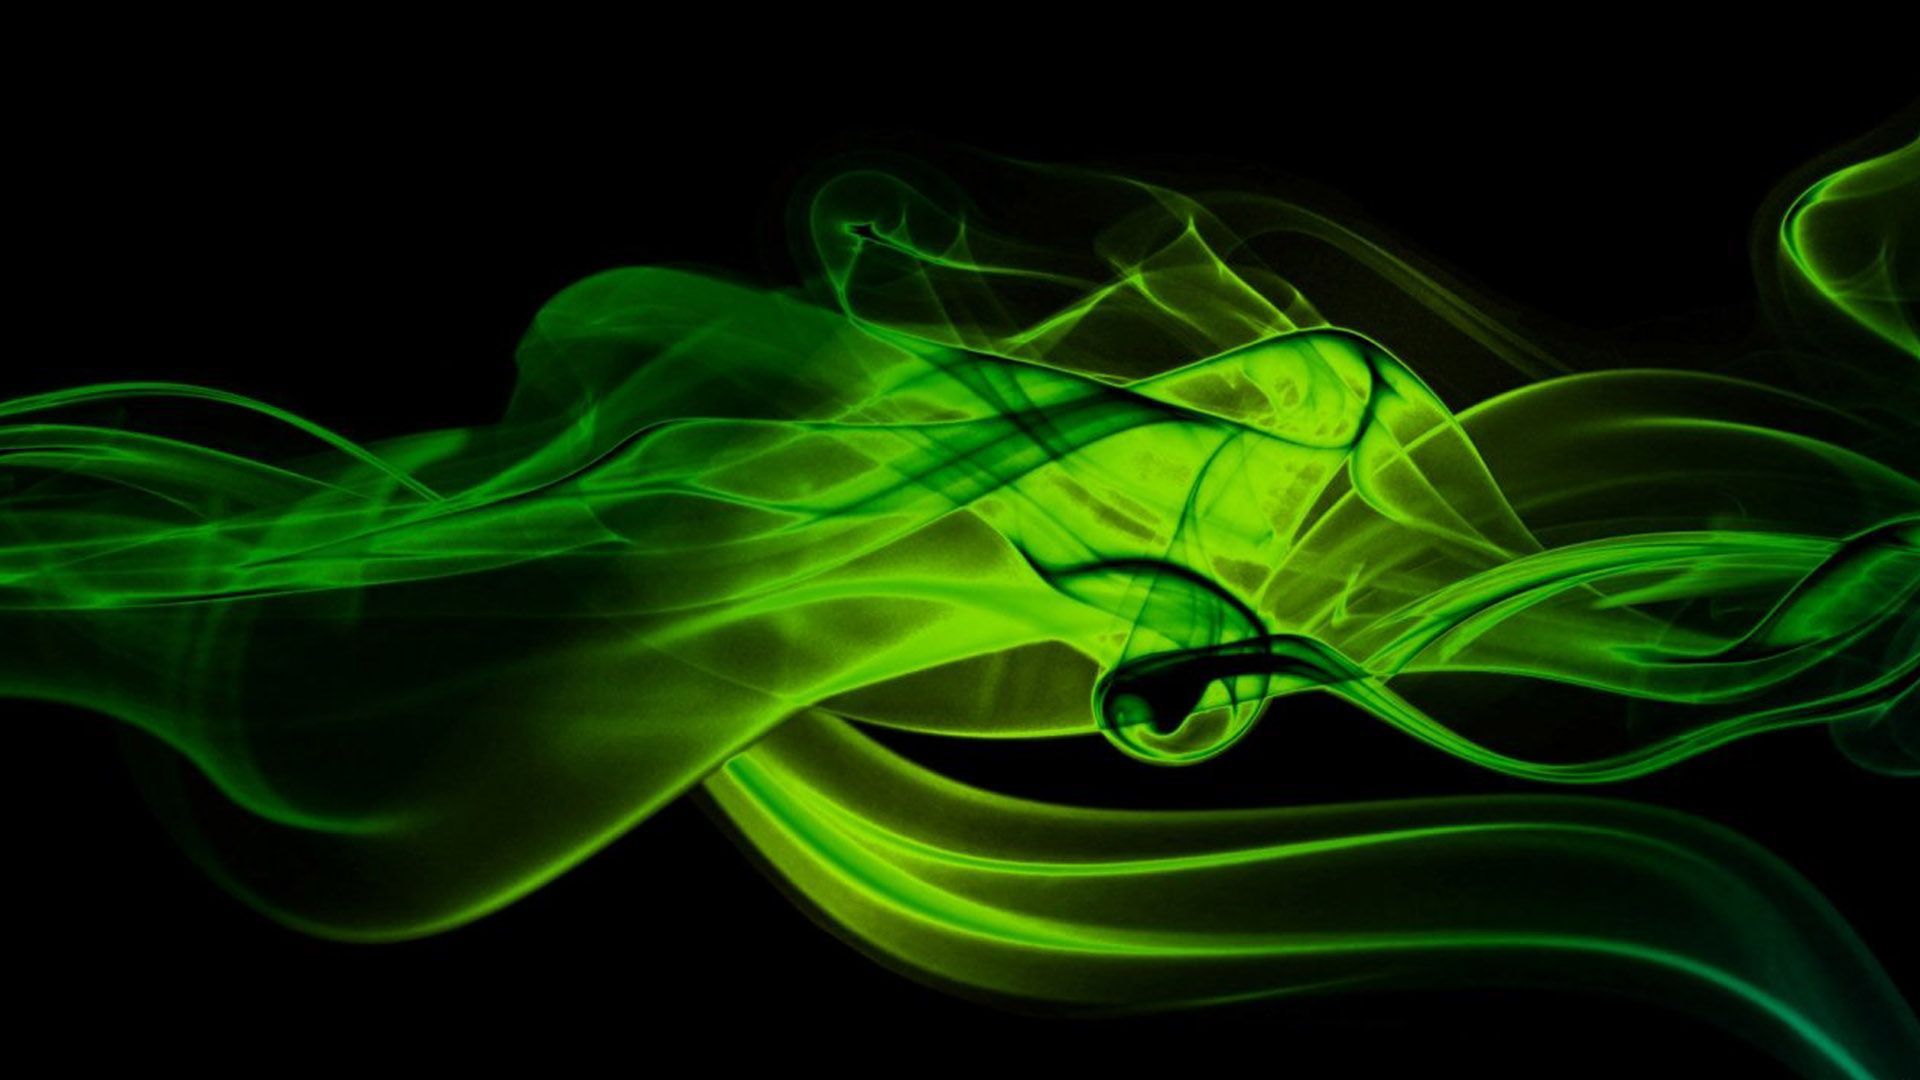 Green smoke on a black background - Green, dark green, smoke, lime green, neon green